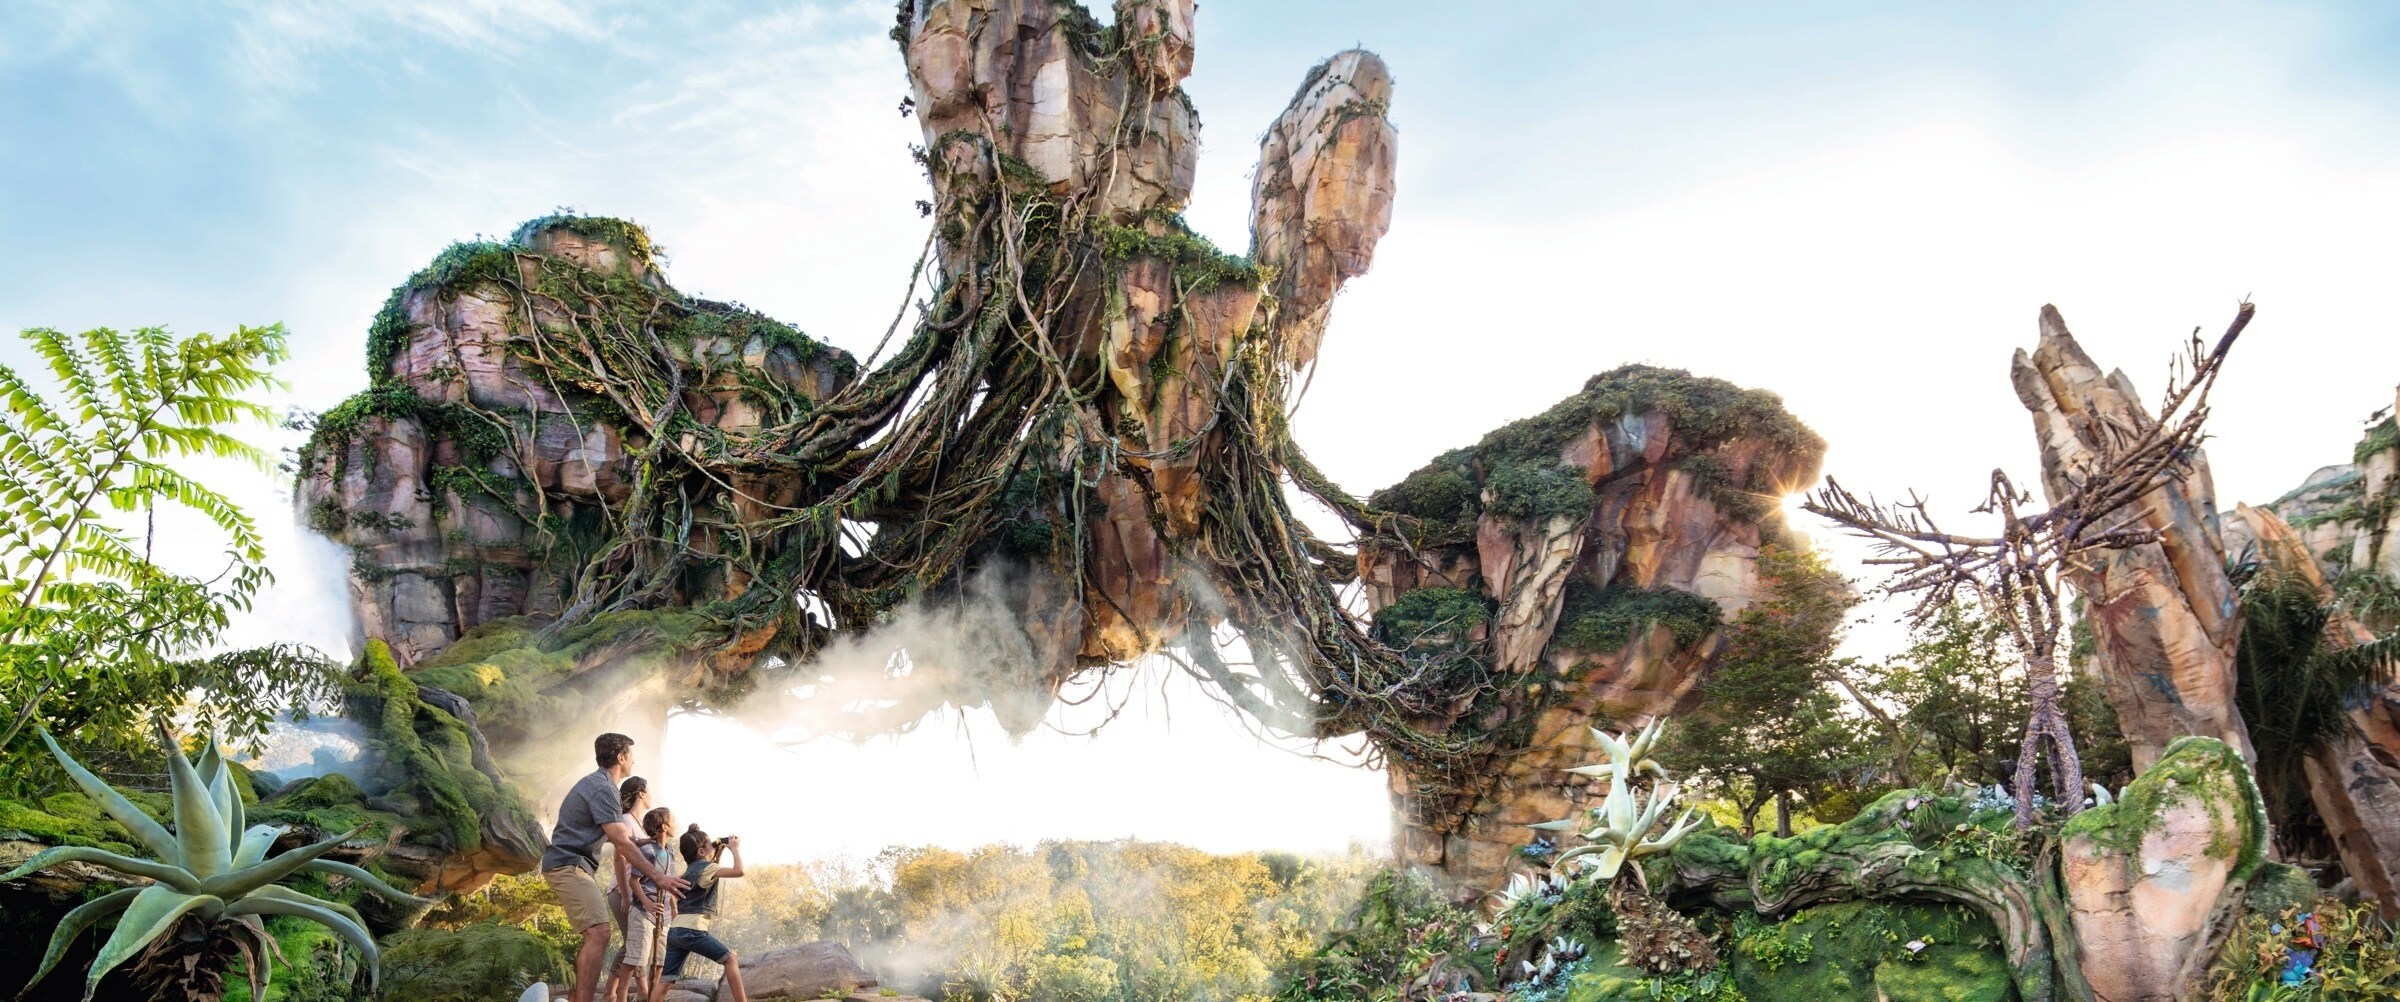 Top | Disney World | Pandora The World of Avatar video